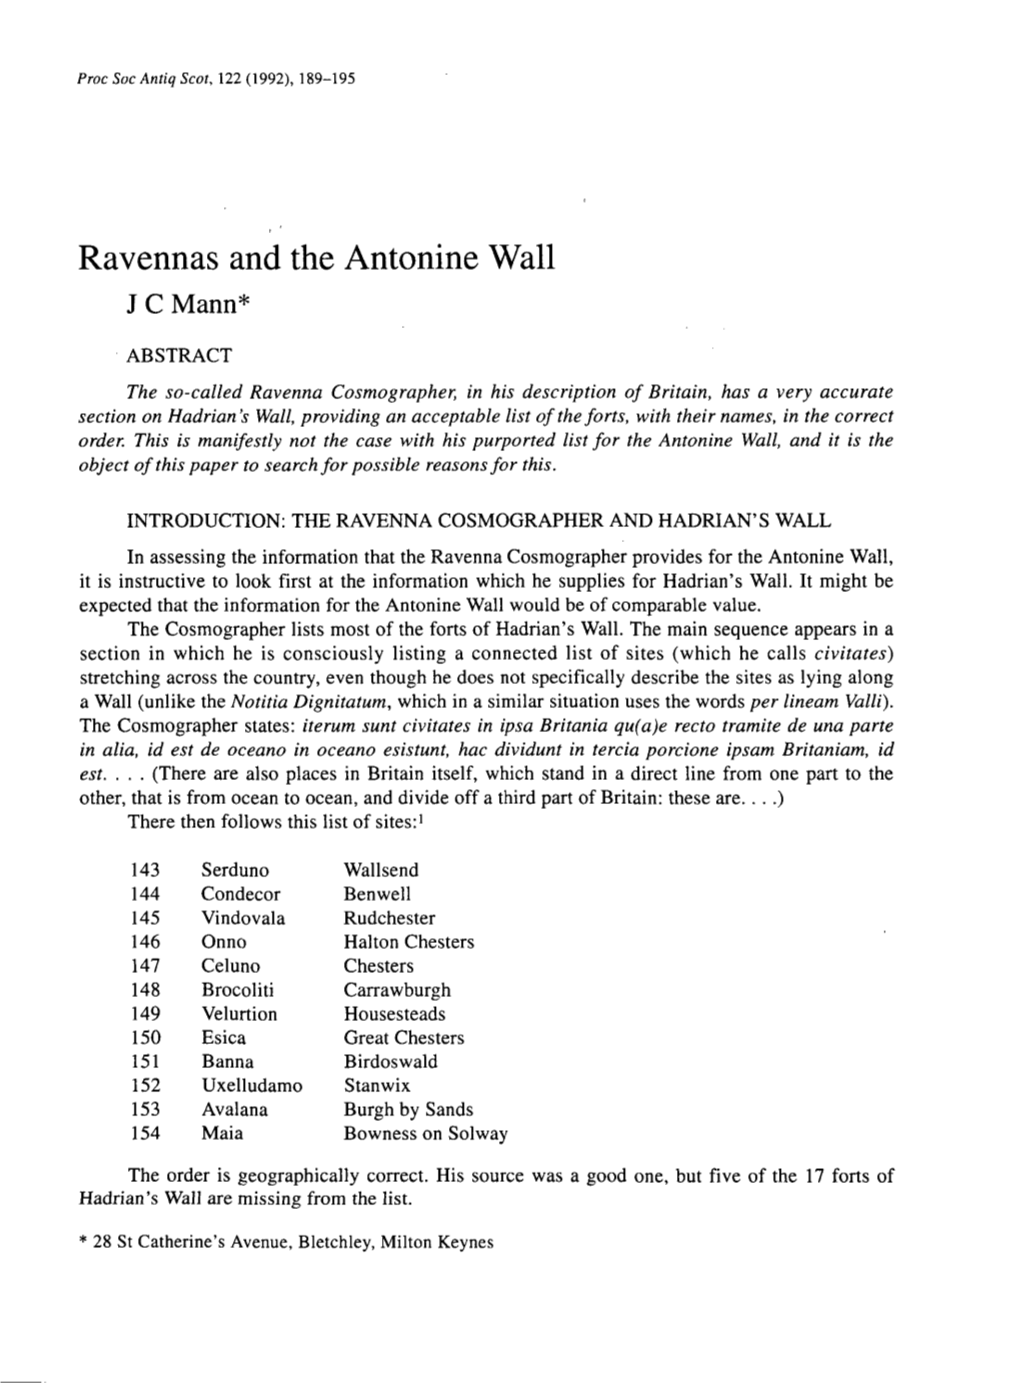 Ravennas and the Antonine Wall Mannjc *